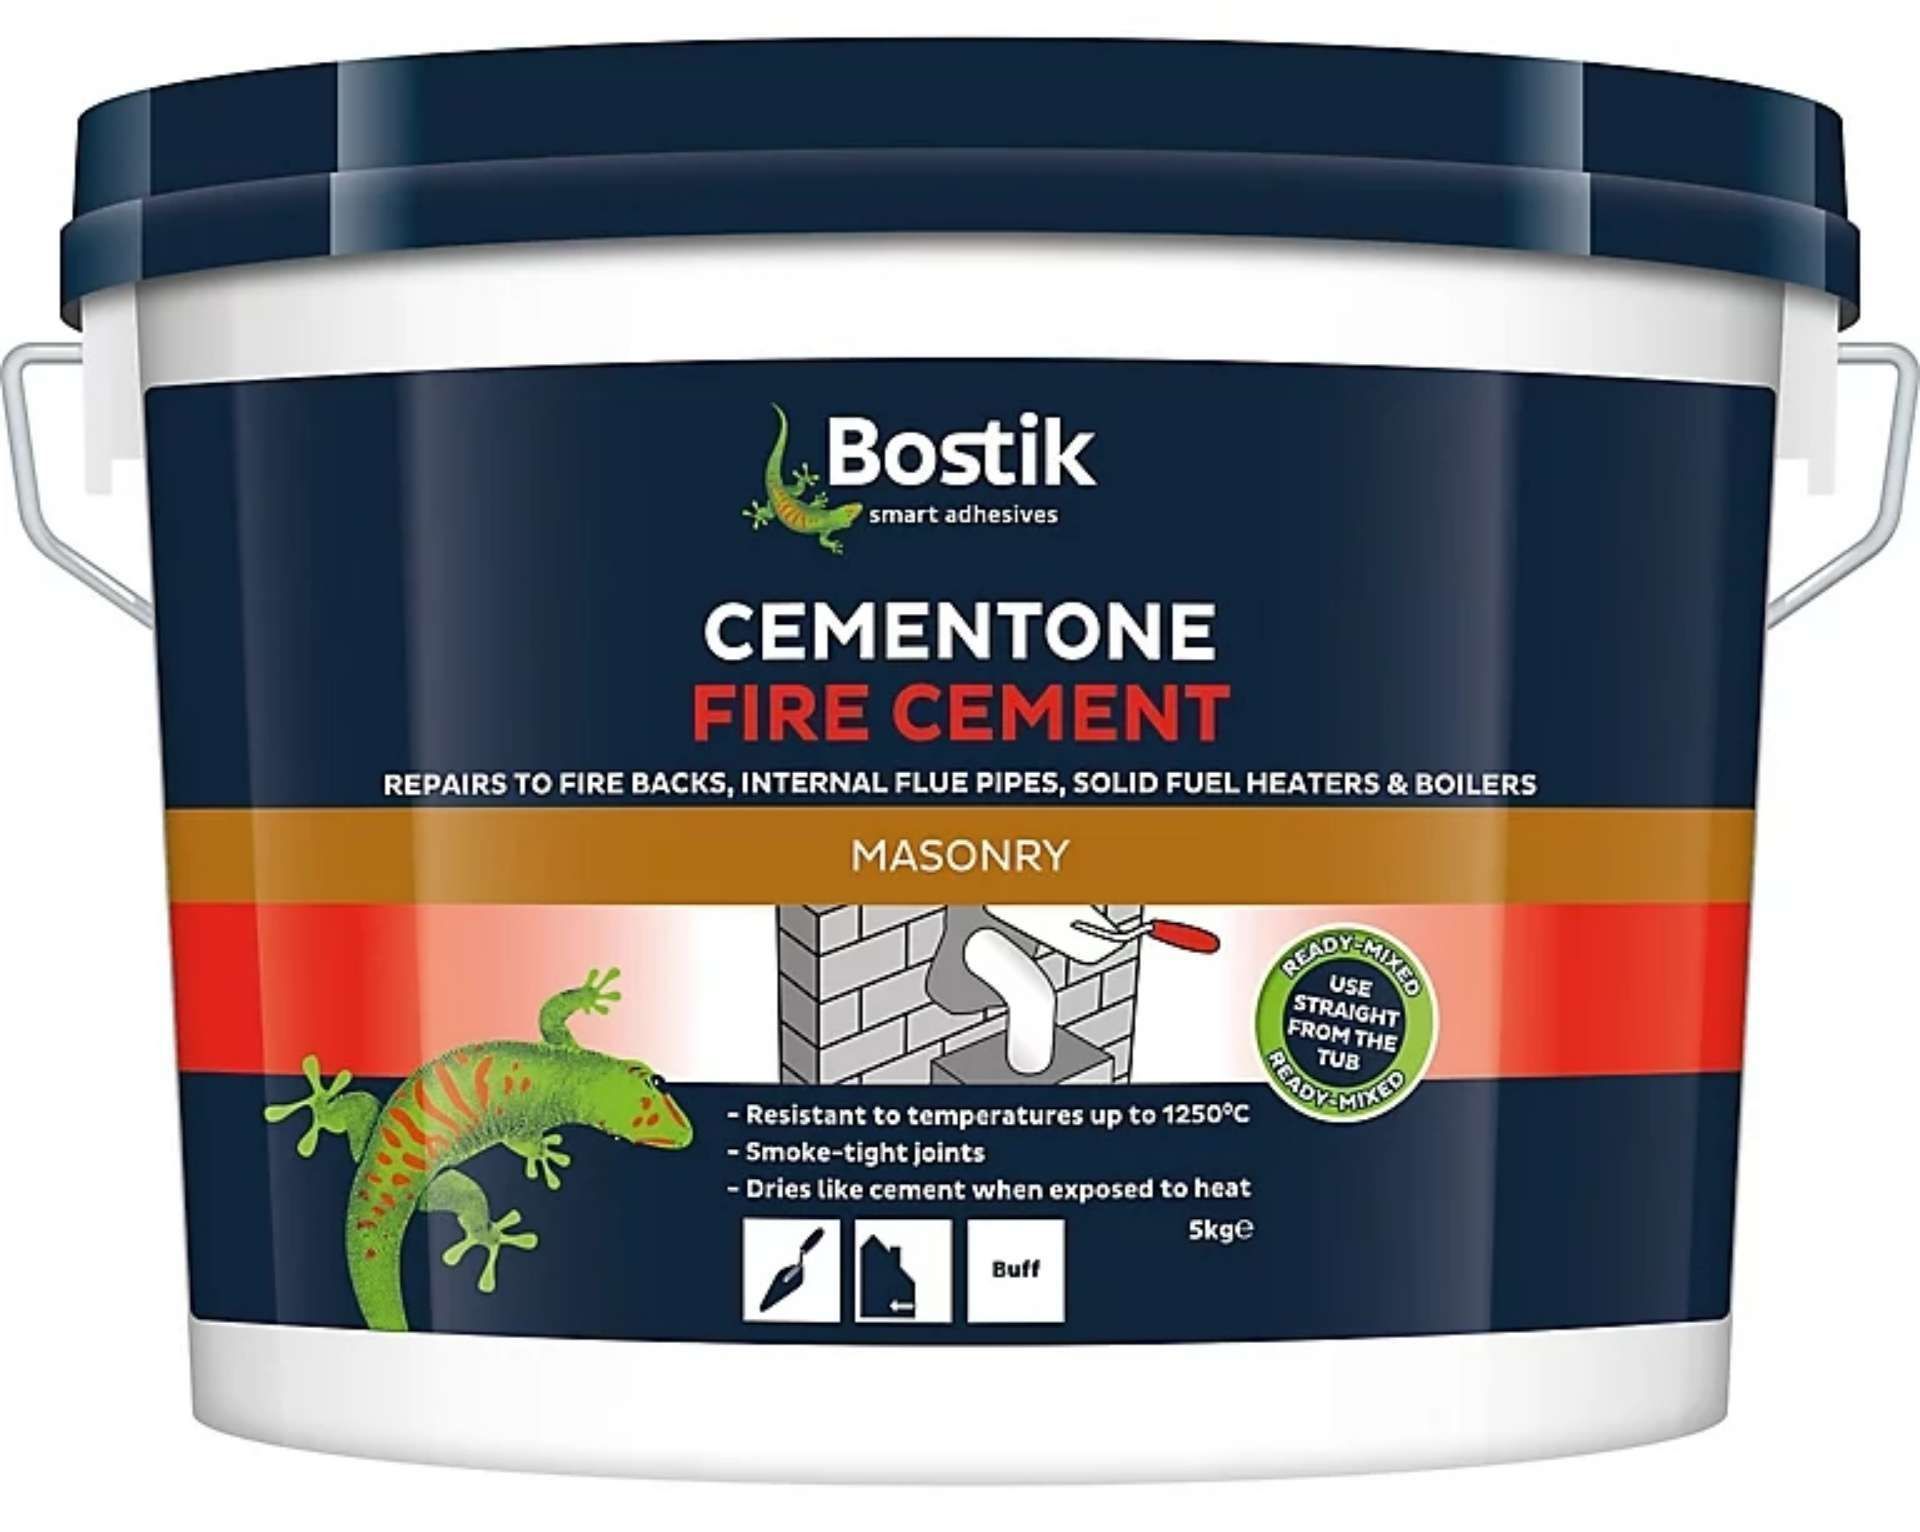 20 X BRAND NEW BOSTIK Fire Cement - MASONRY. RRP £12.99 EACH. R11. Bostik Cementone Fire Cement is a